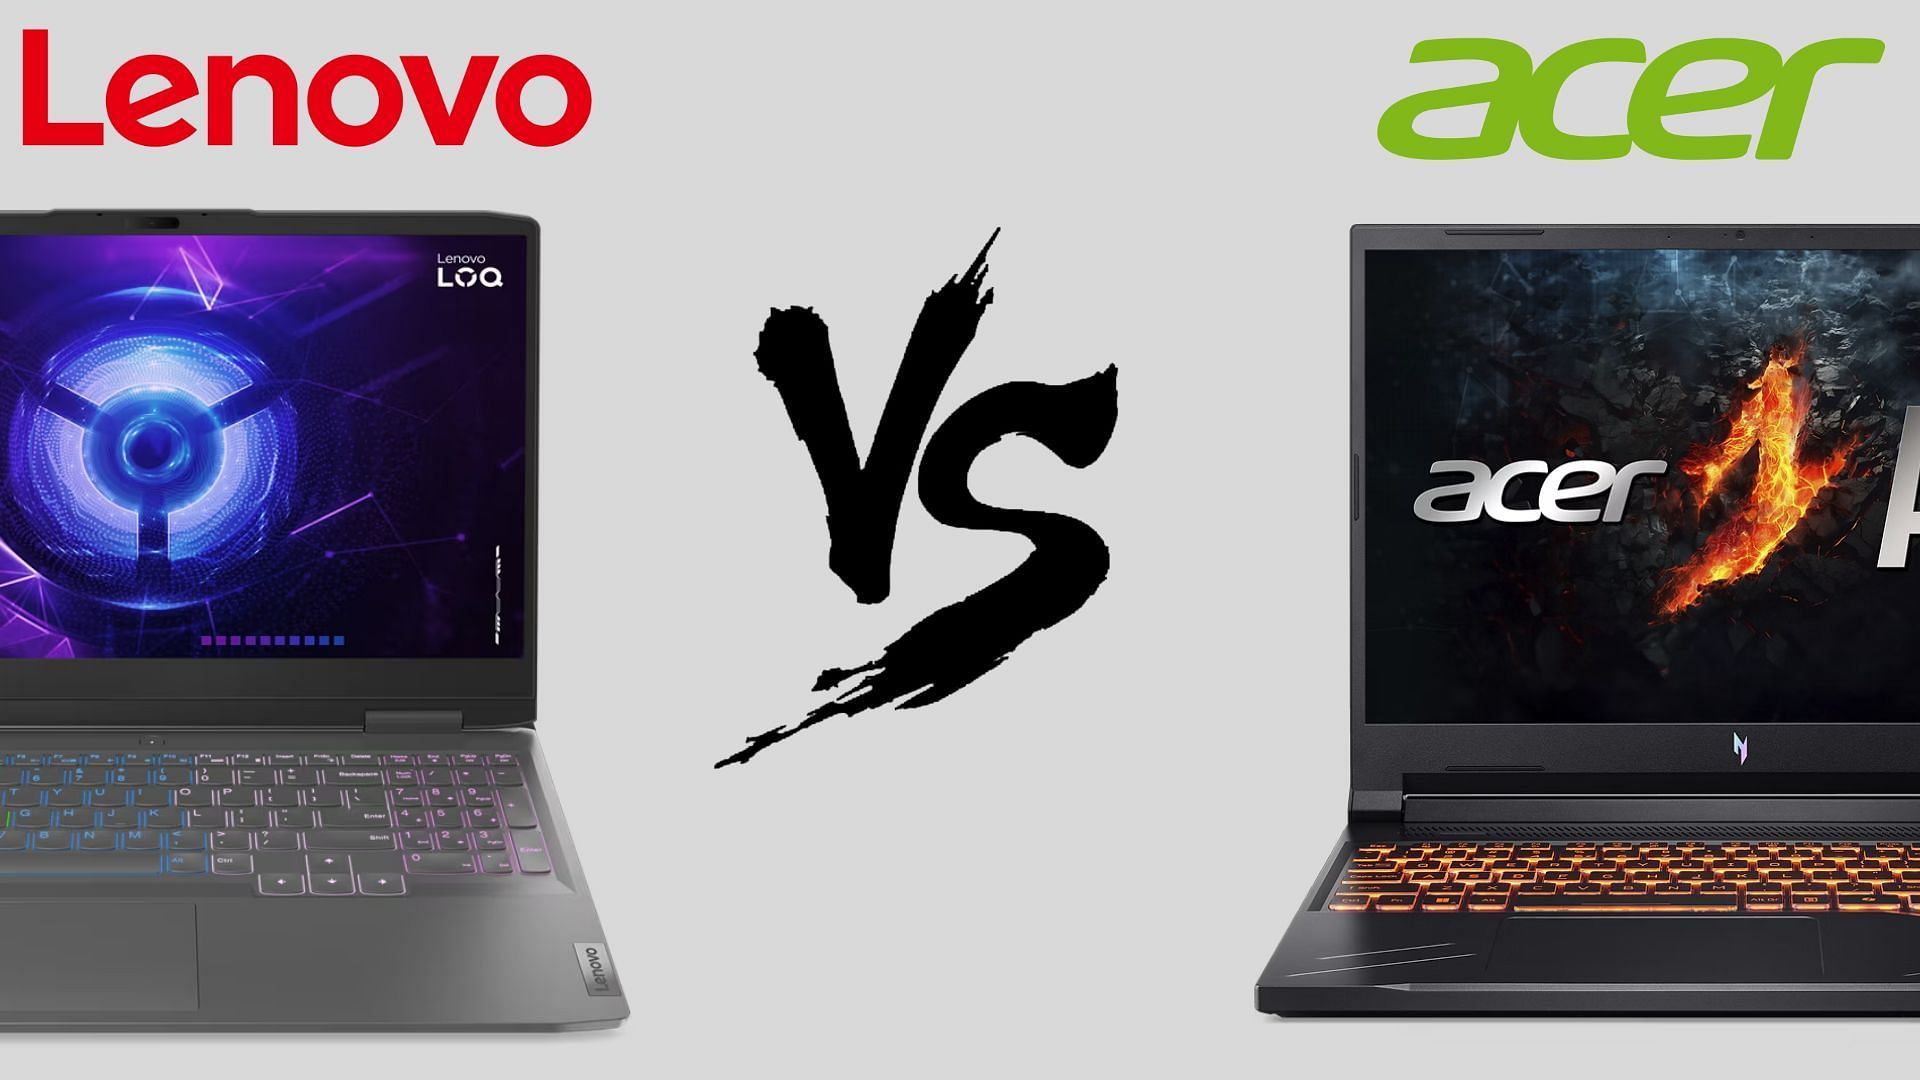 The Lenovo LOQ vs Acer Nitro V comparison (Image via Lenovo, Acer)